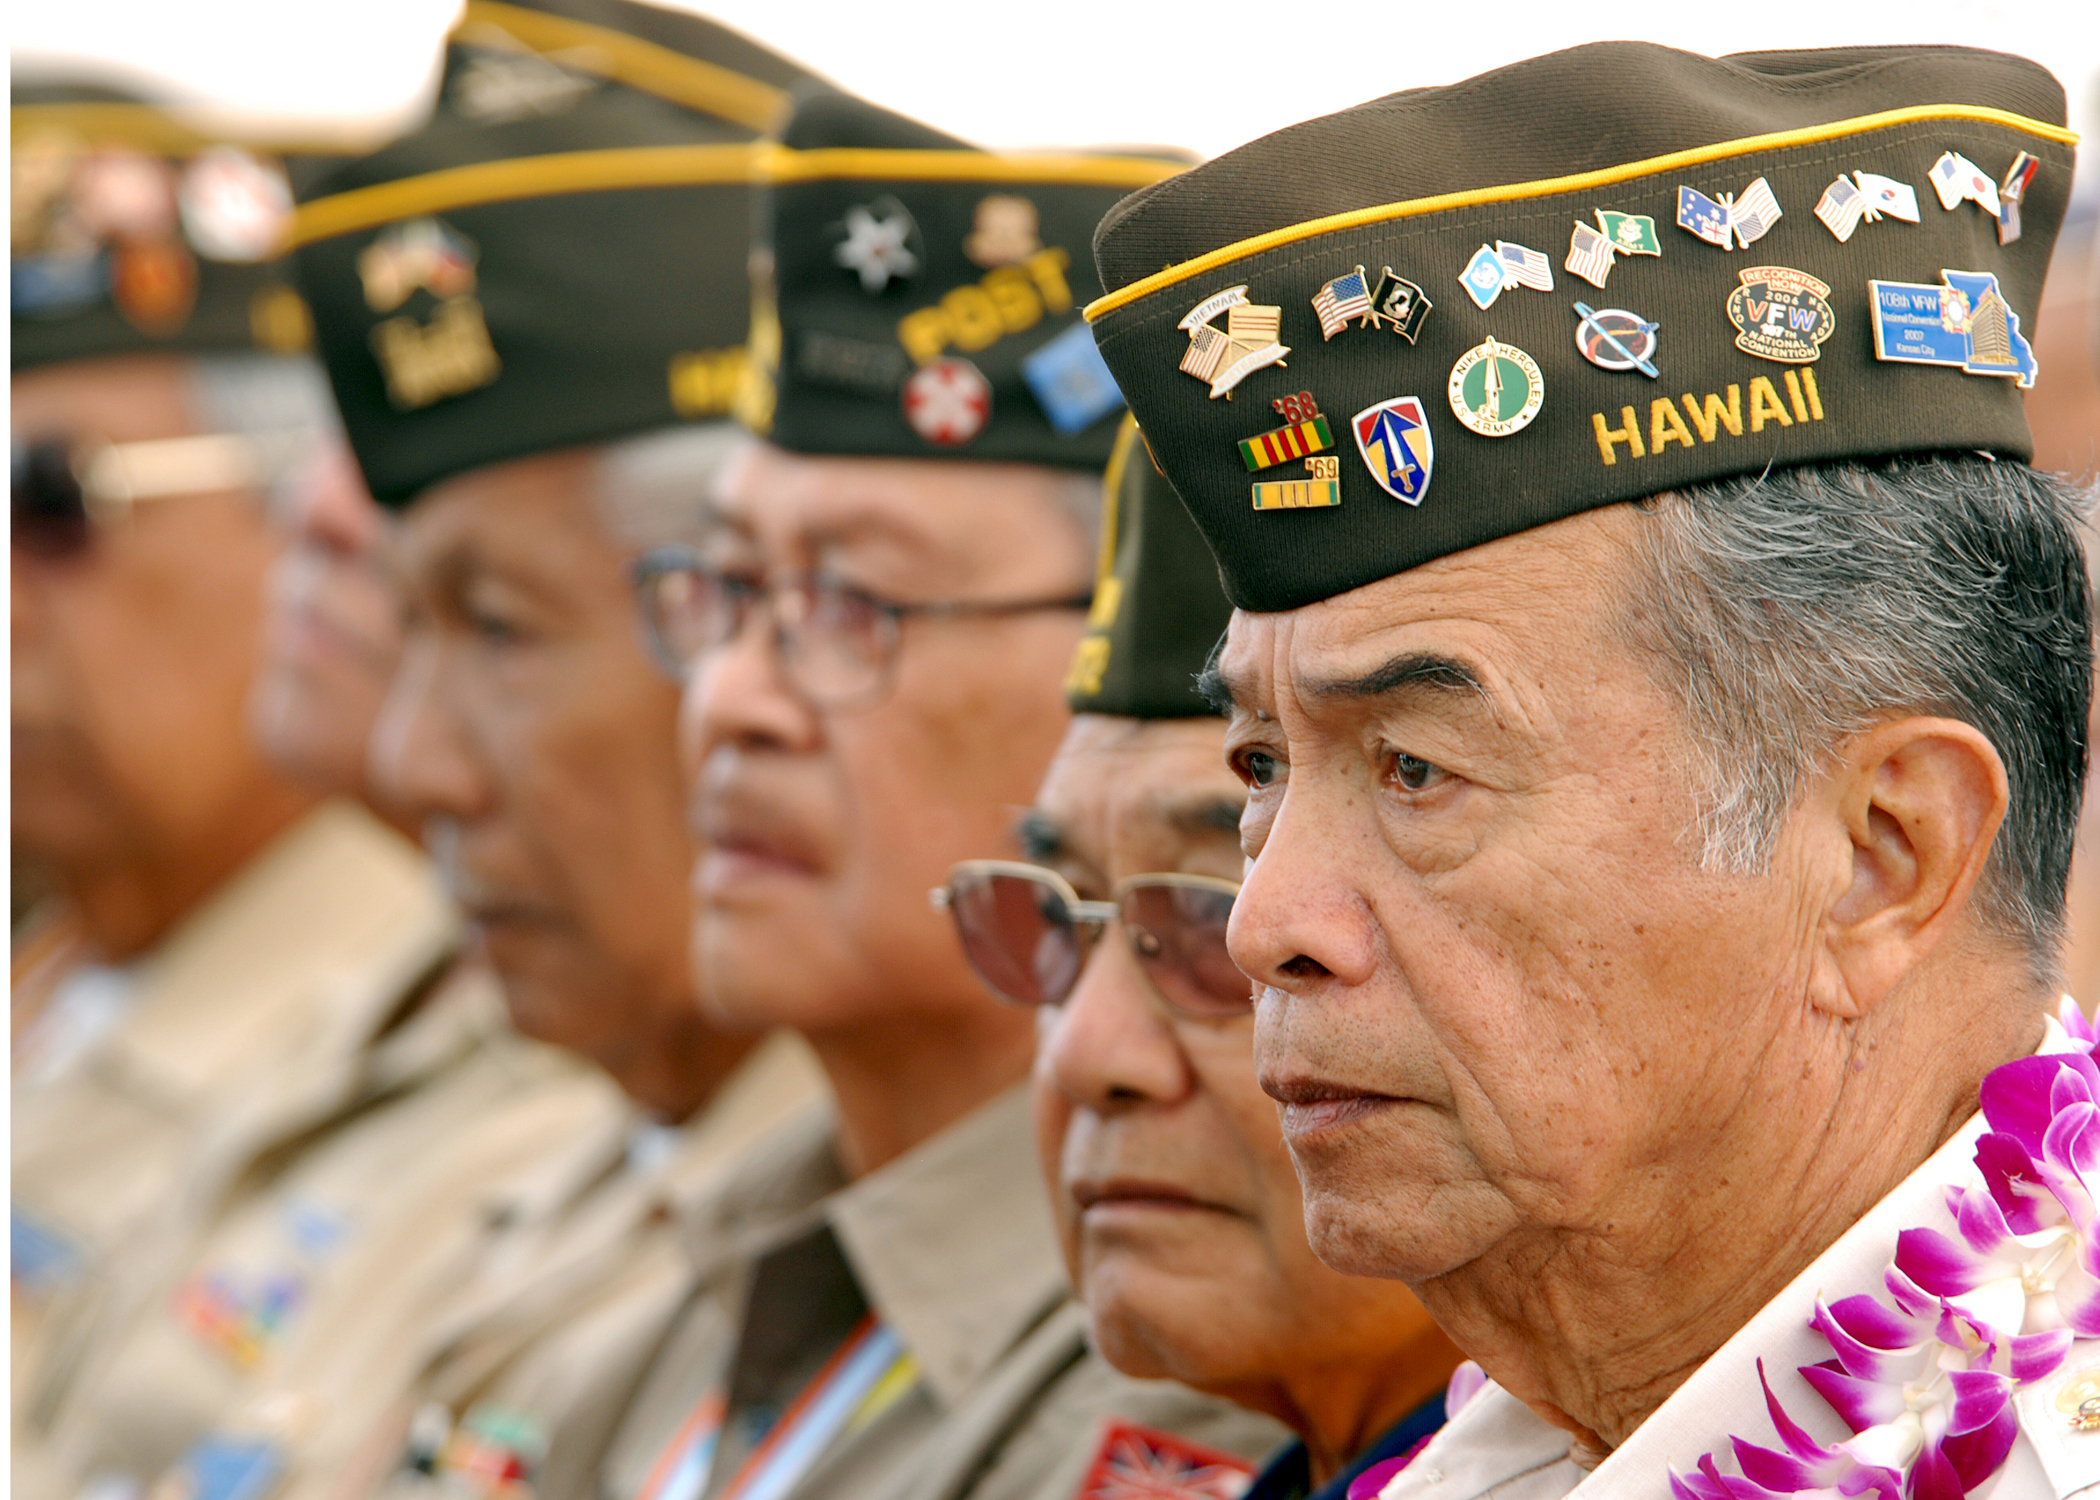 Filipinx Navy veterans wearing Hawaiian Navy hats.